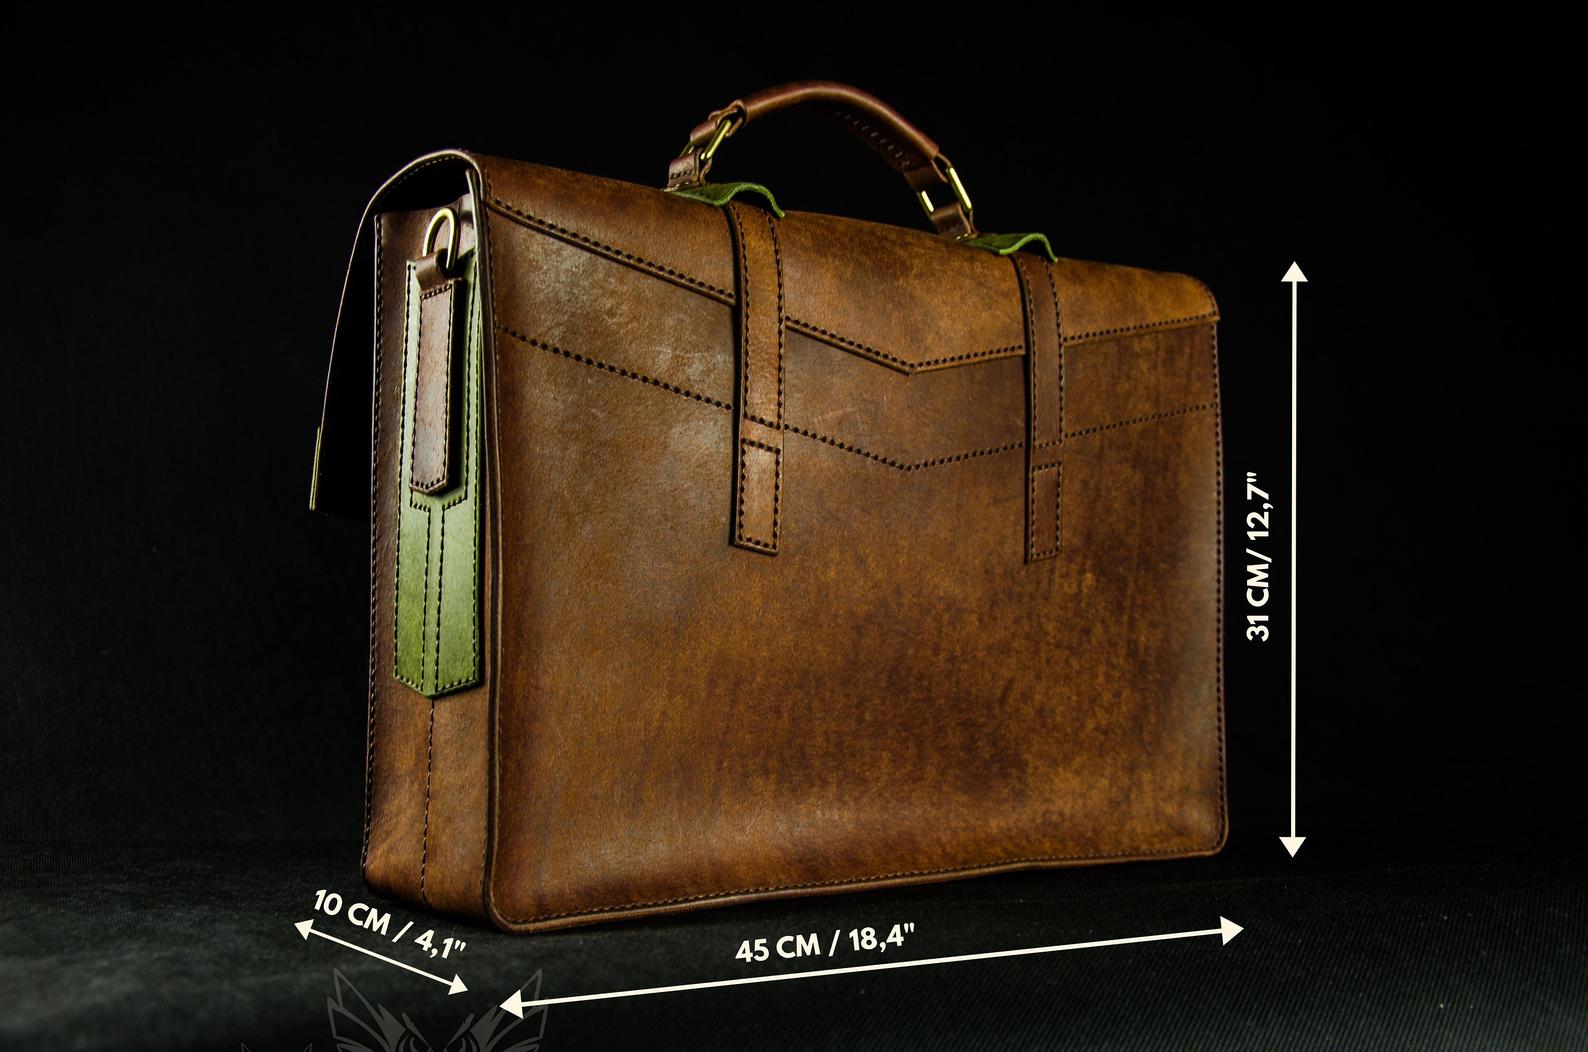 Briefcase Laptop Bag [PDF pattern]